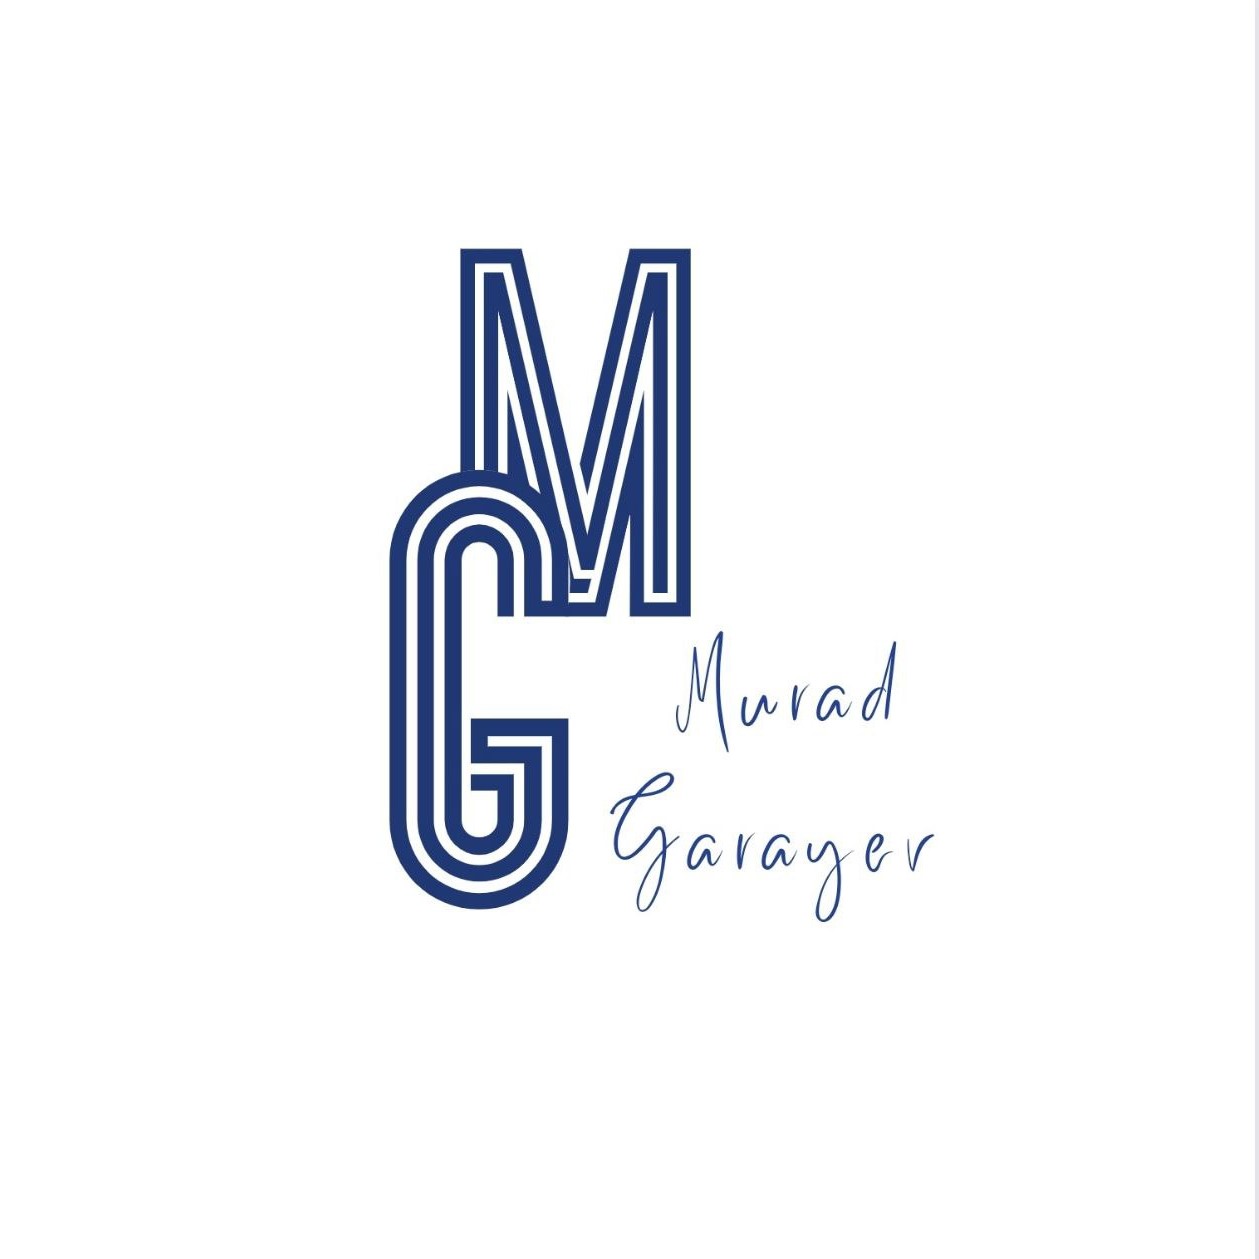 Murad Garayev logo